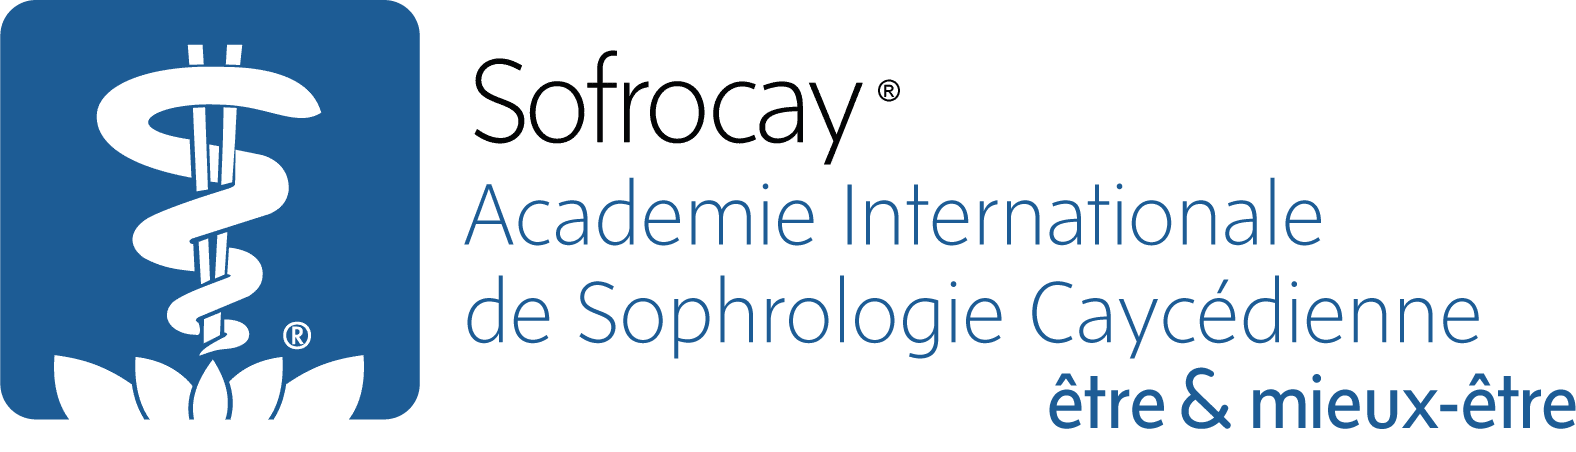 Académie Internationale de Sophrologie Caycédienne®